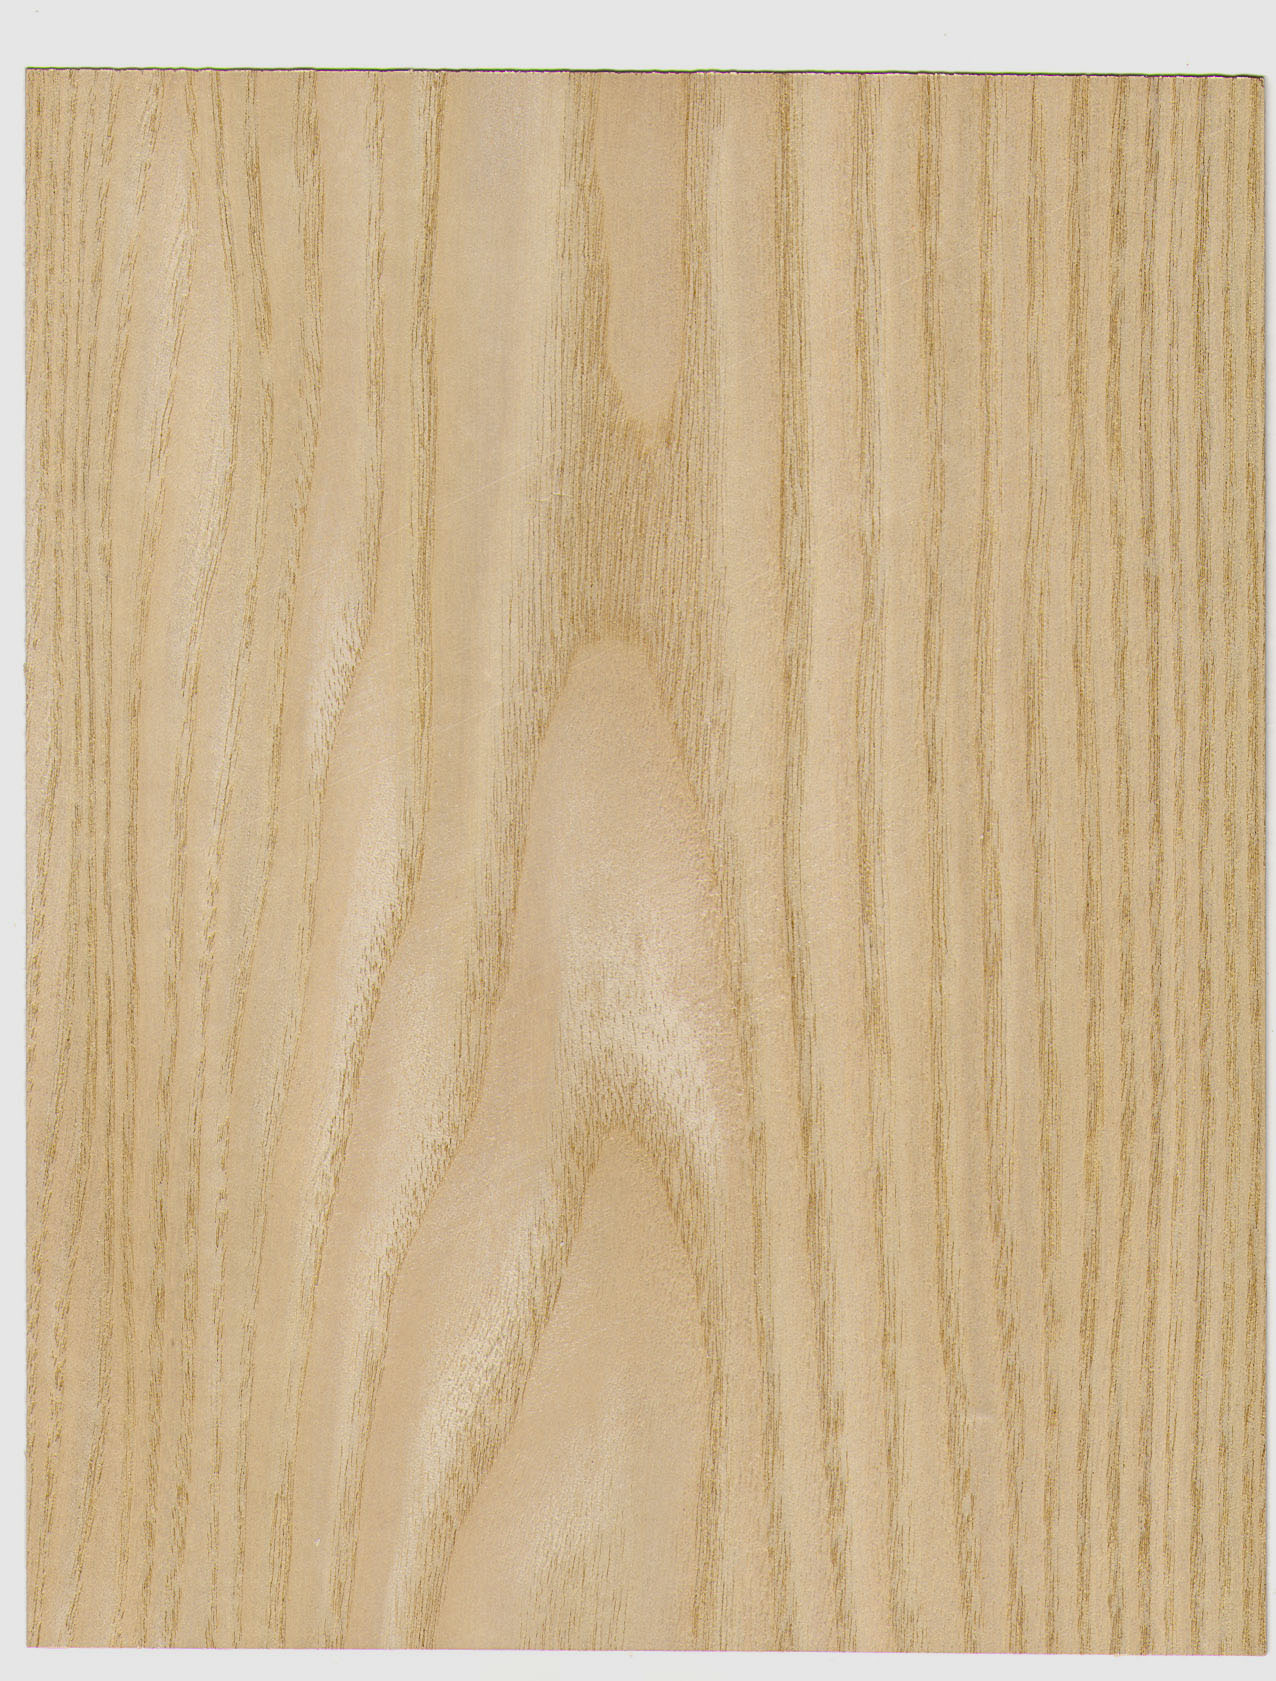 Дерево текстура, ламинат, скачать фото фон, wood background texture image